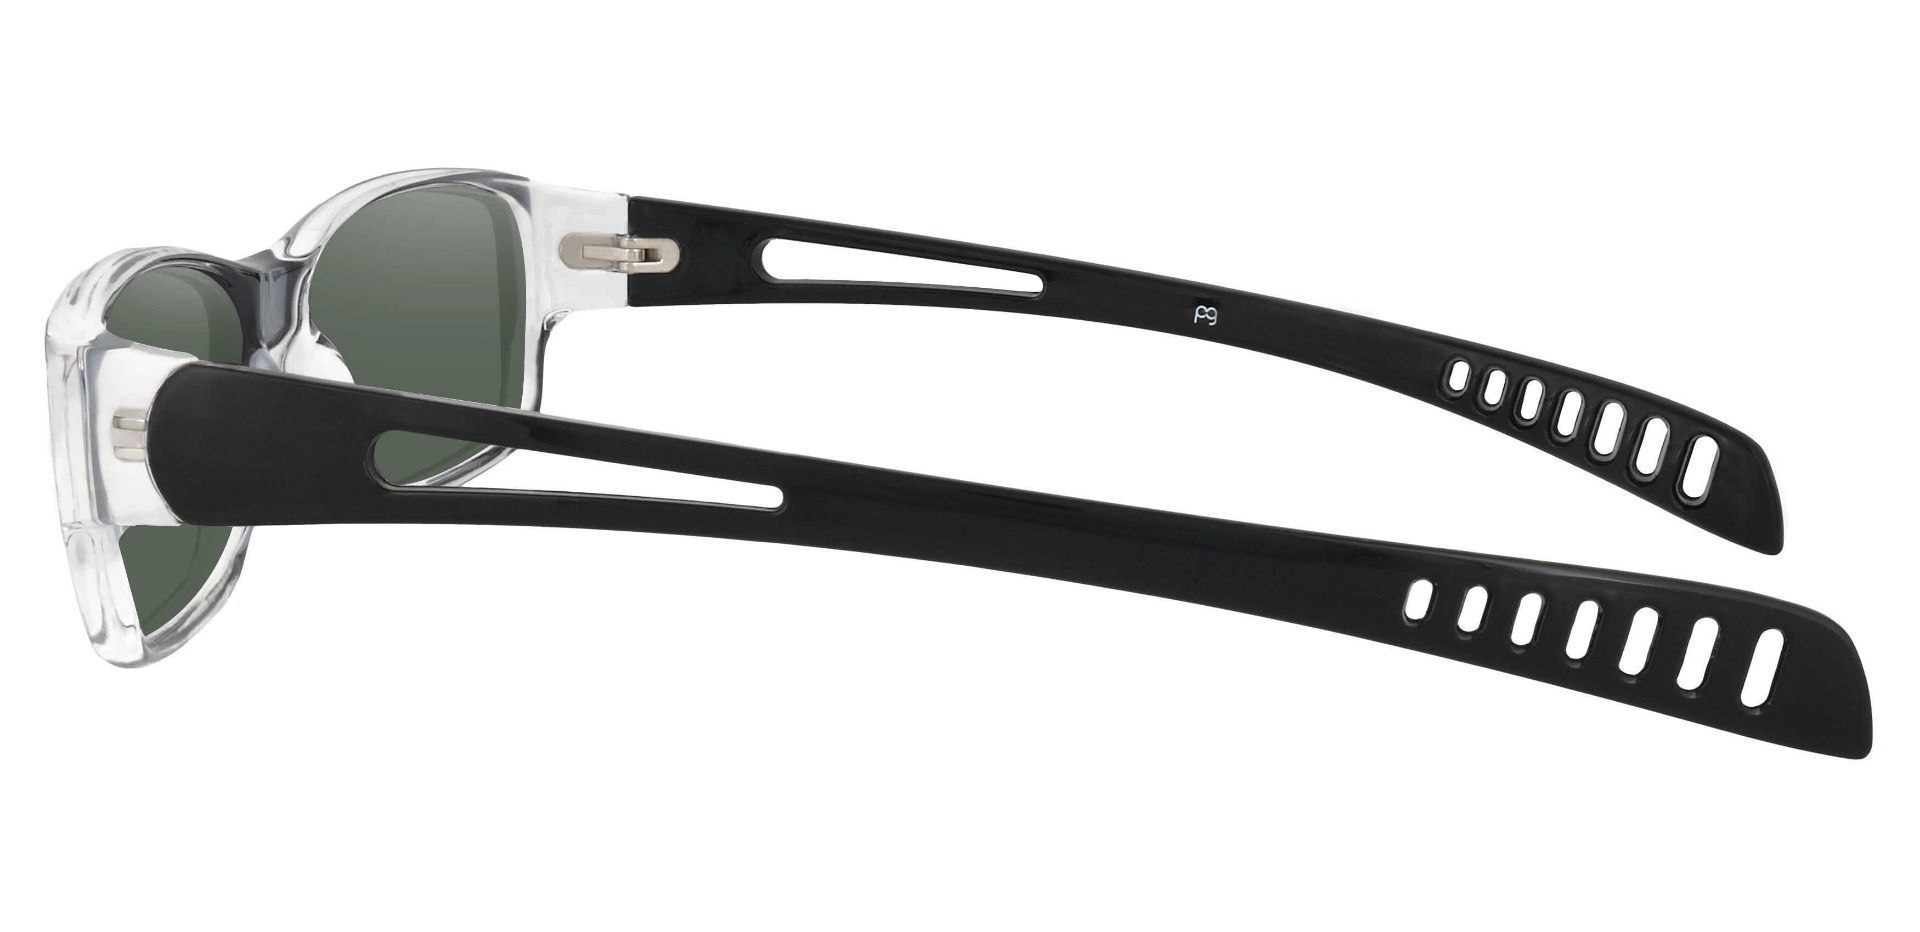 Mercury Rectangle Prescription Sunglasses - Gray Frame With Green Lenses